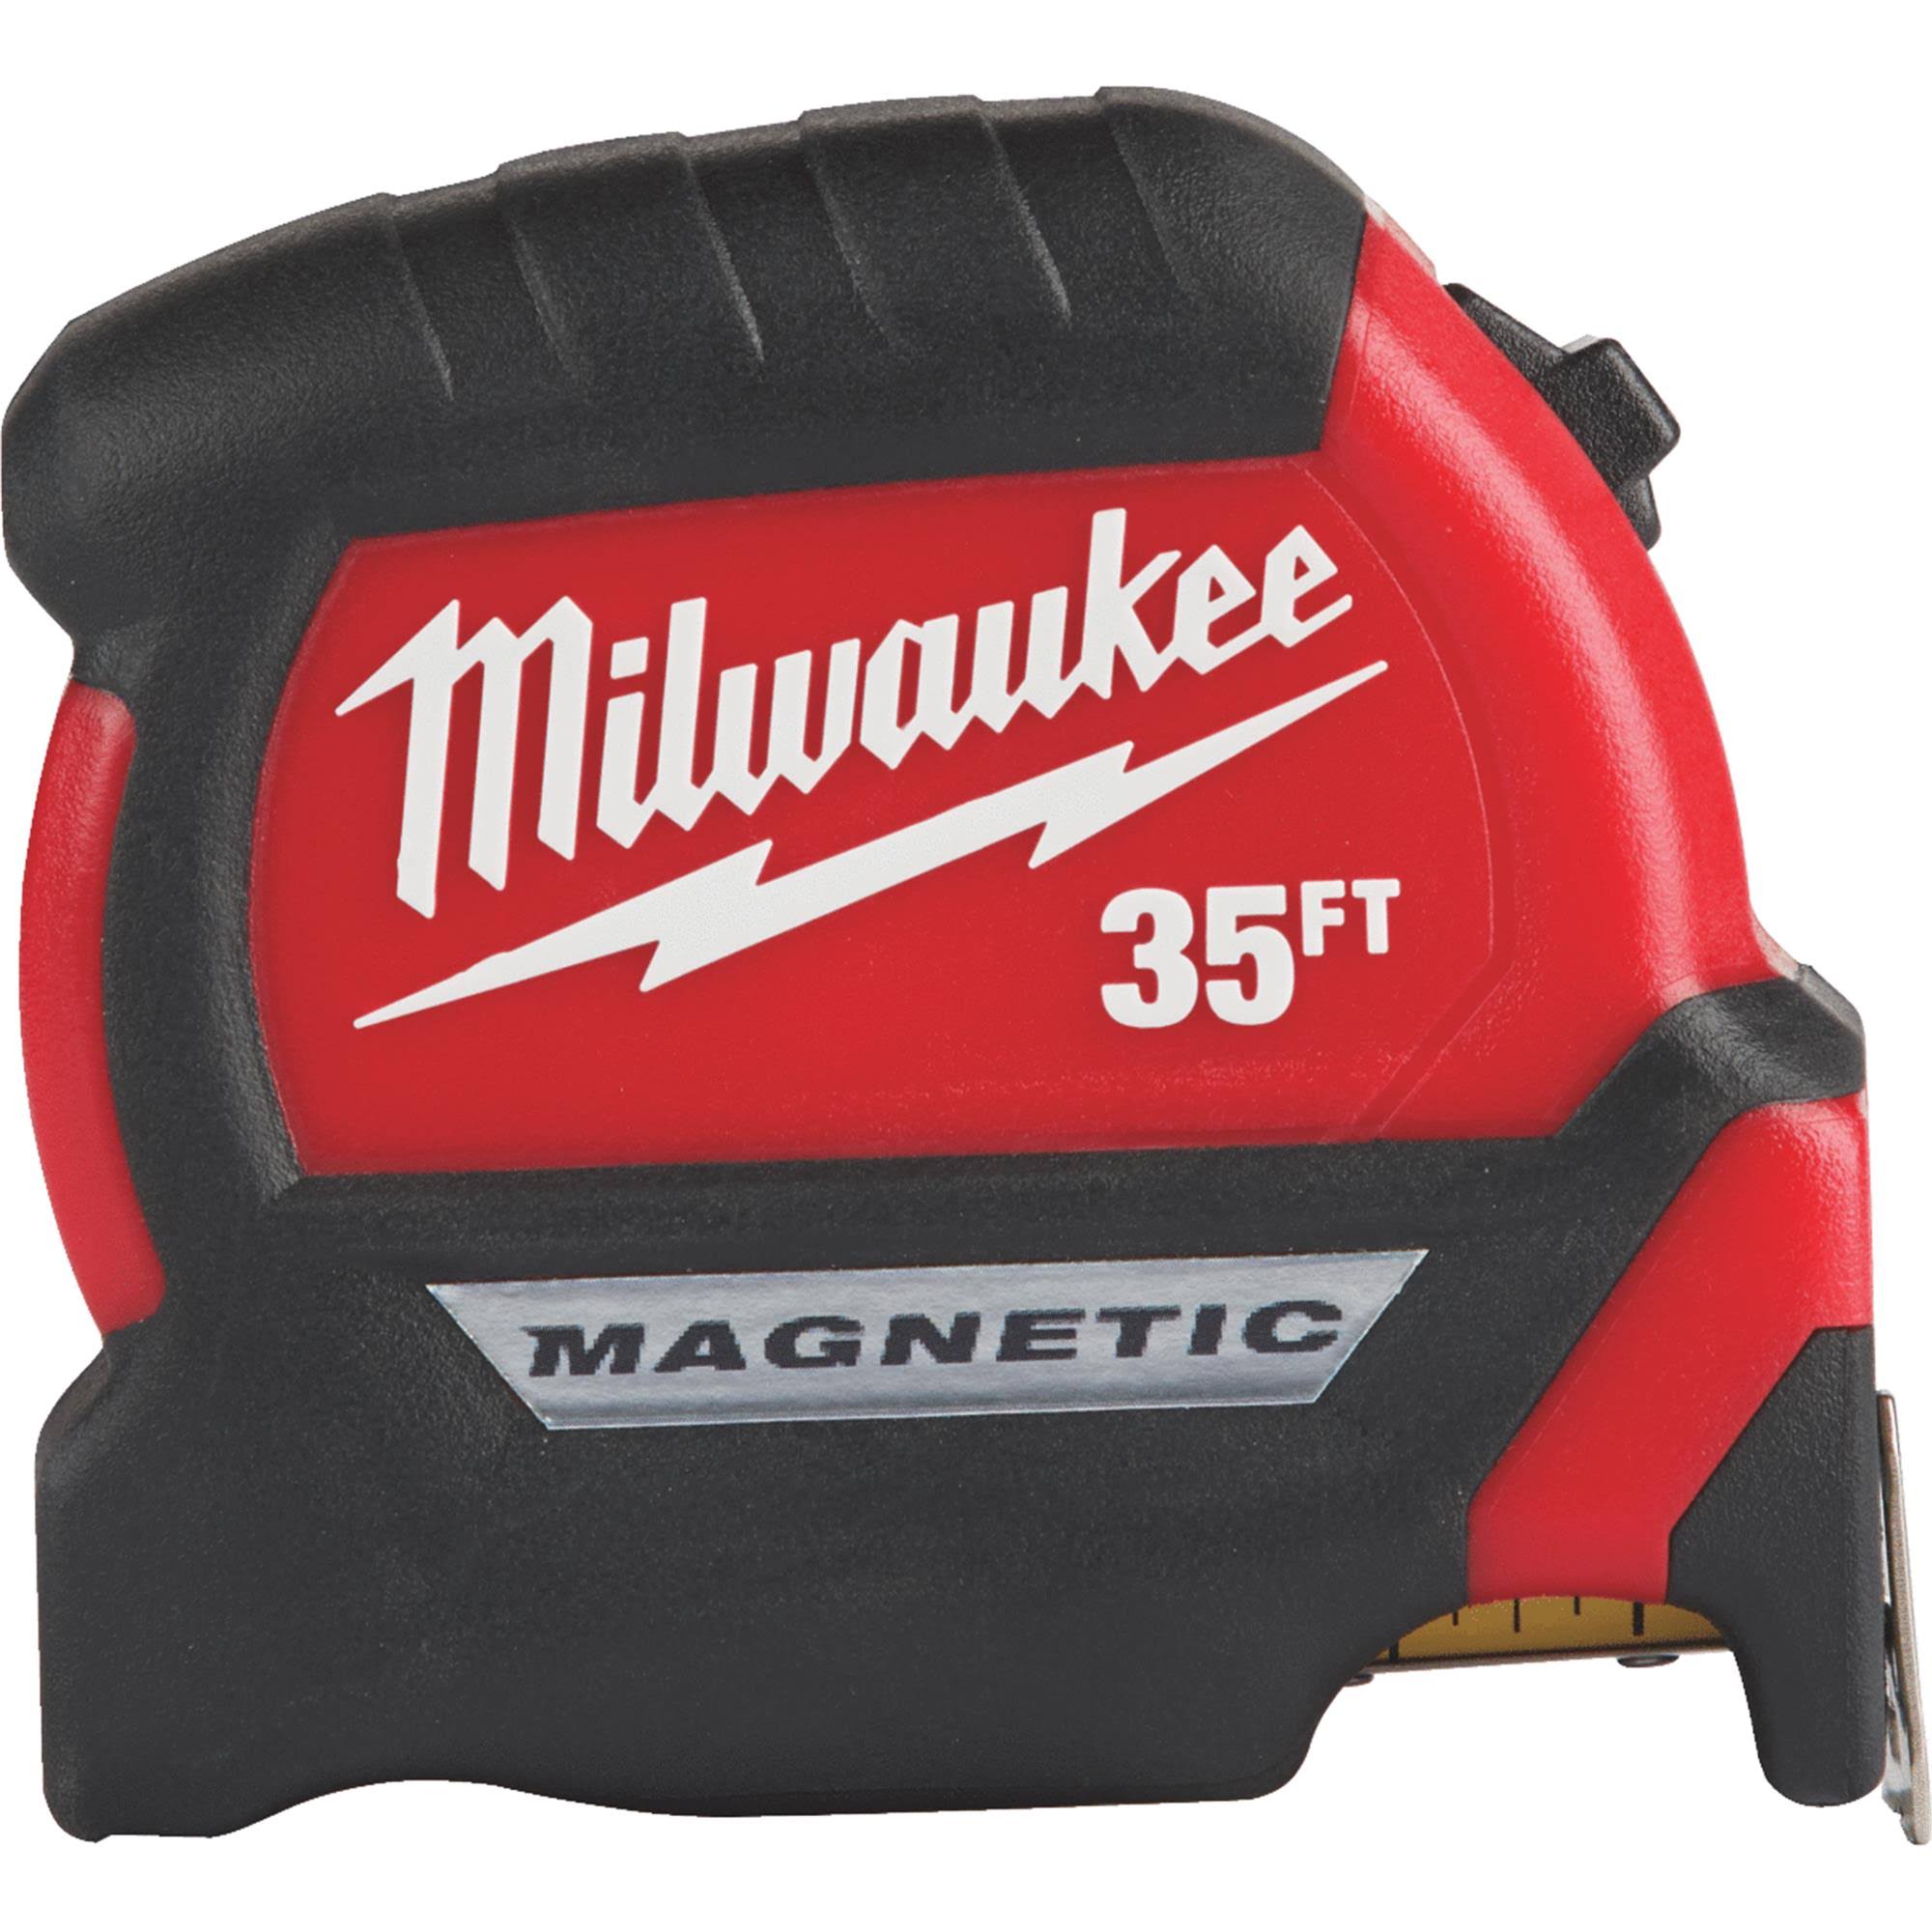 Milwaukee 48-22-0335 35' Compact Magnetic Tape Measure